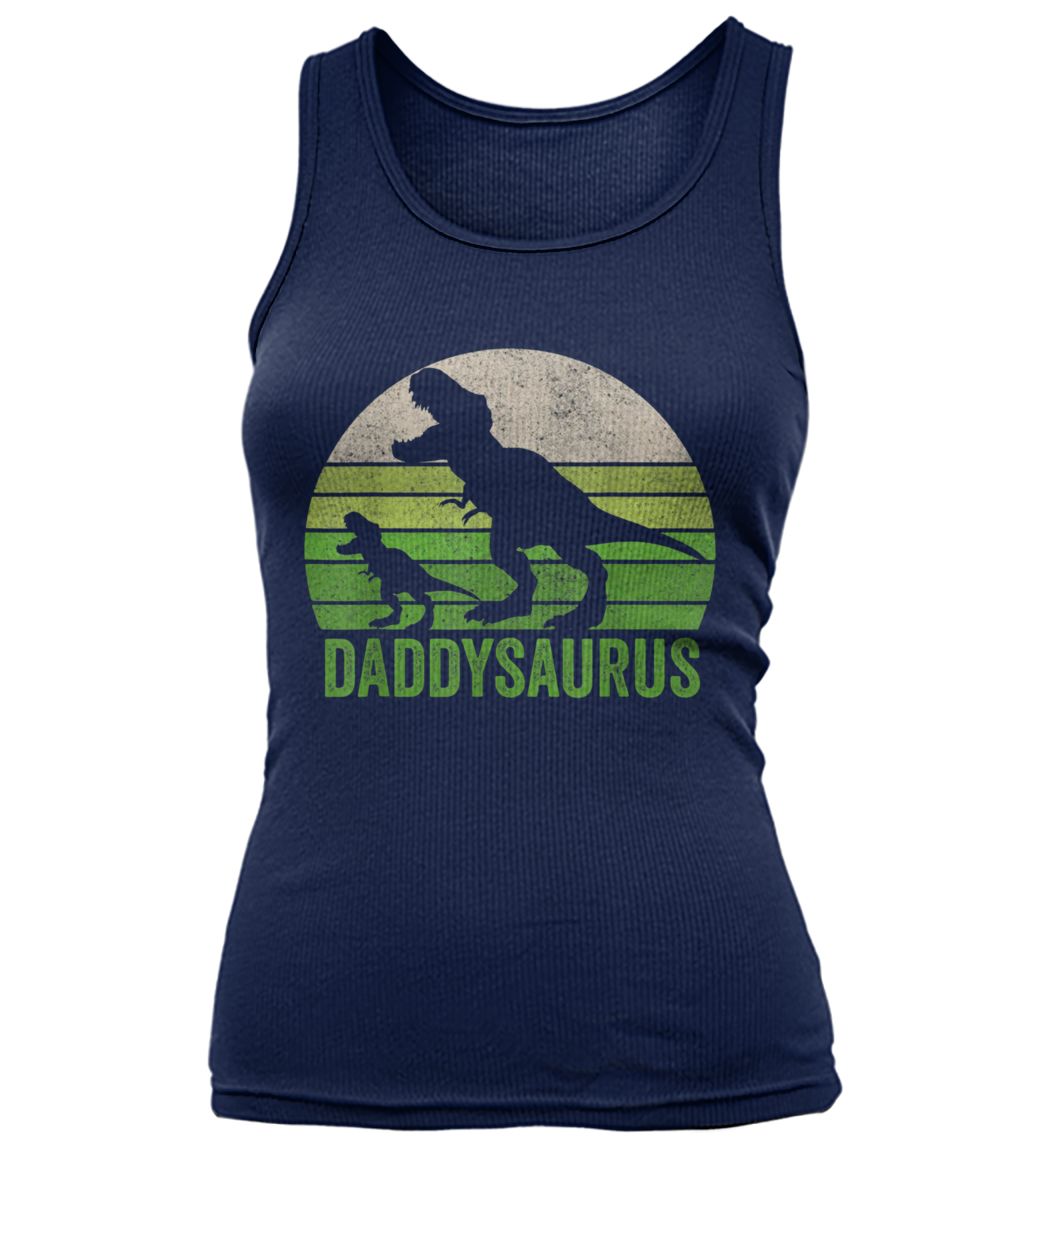 Daddy dinosaur daddysaurus father's day women's tank top